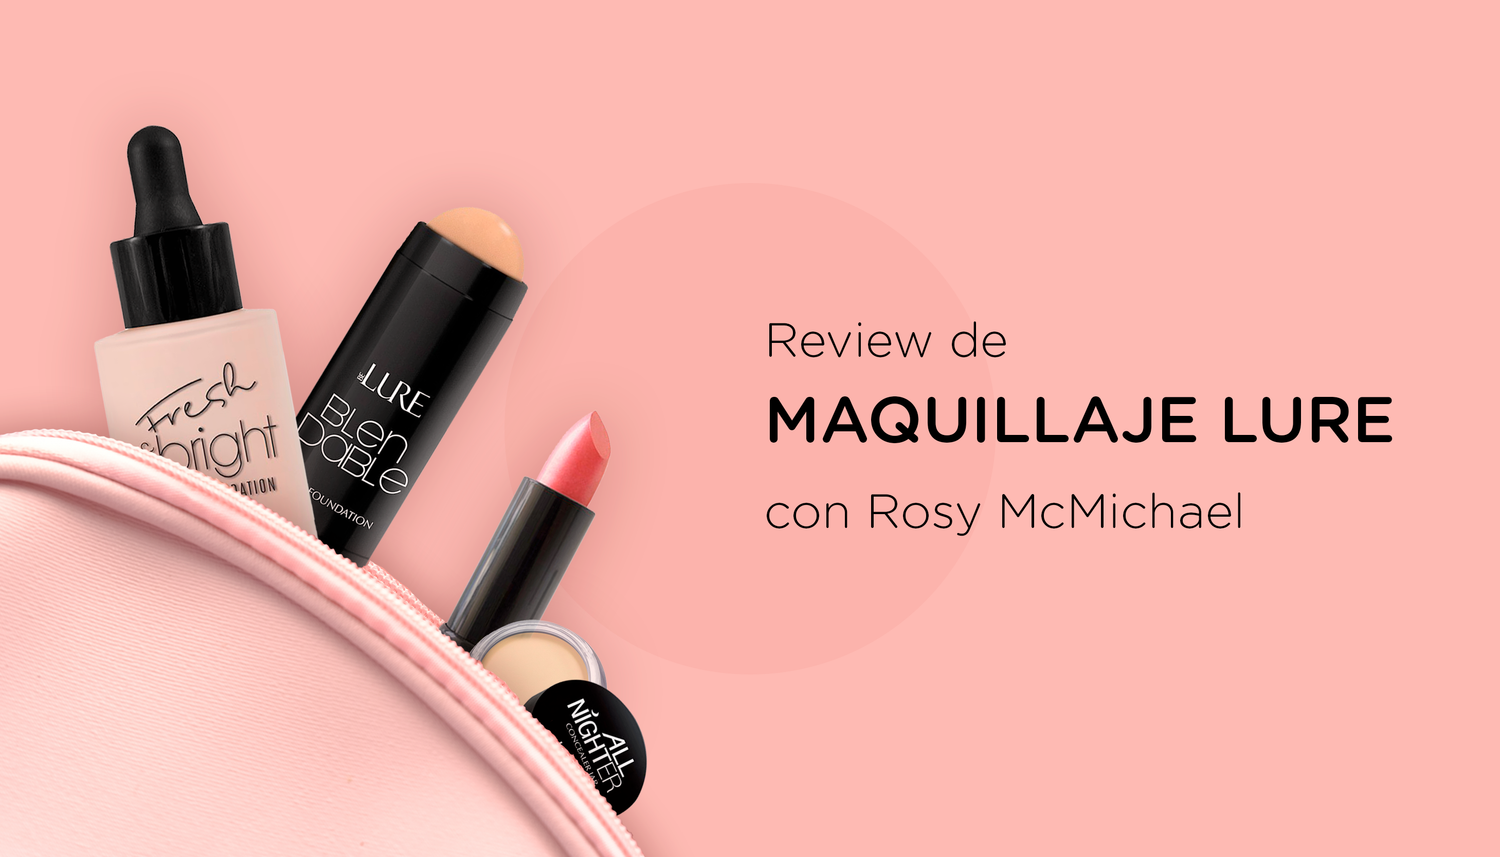 Review de Maquillaje Lure con Rosy McMichael